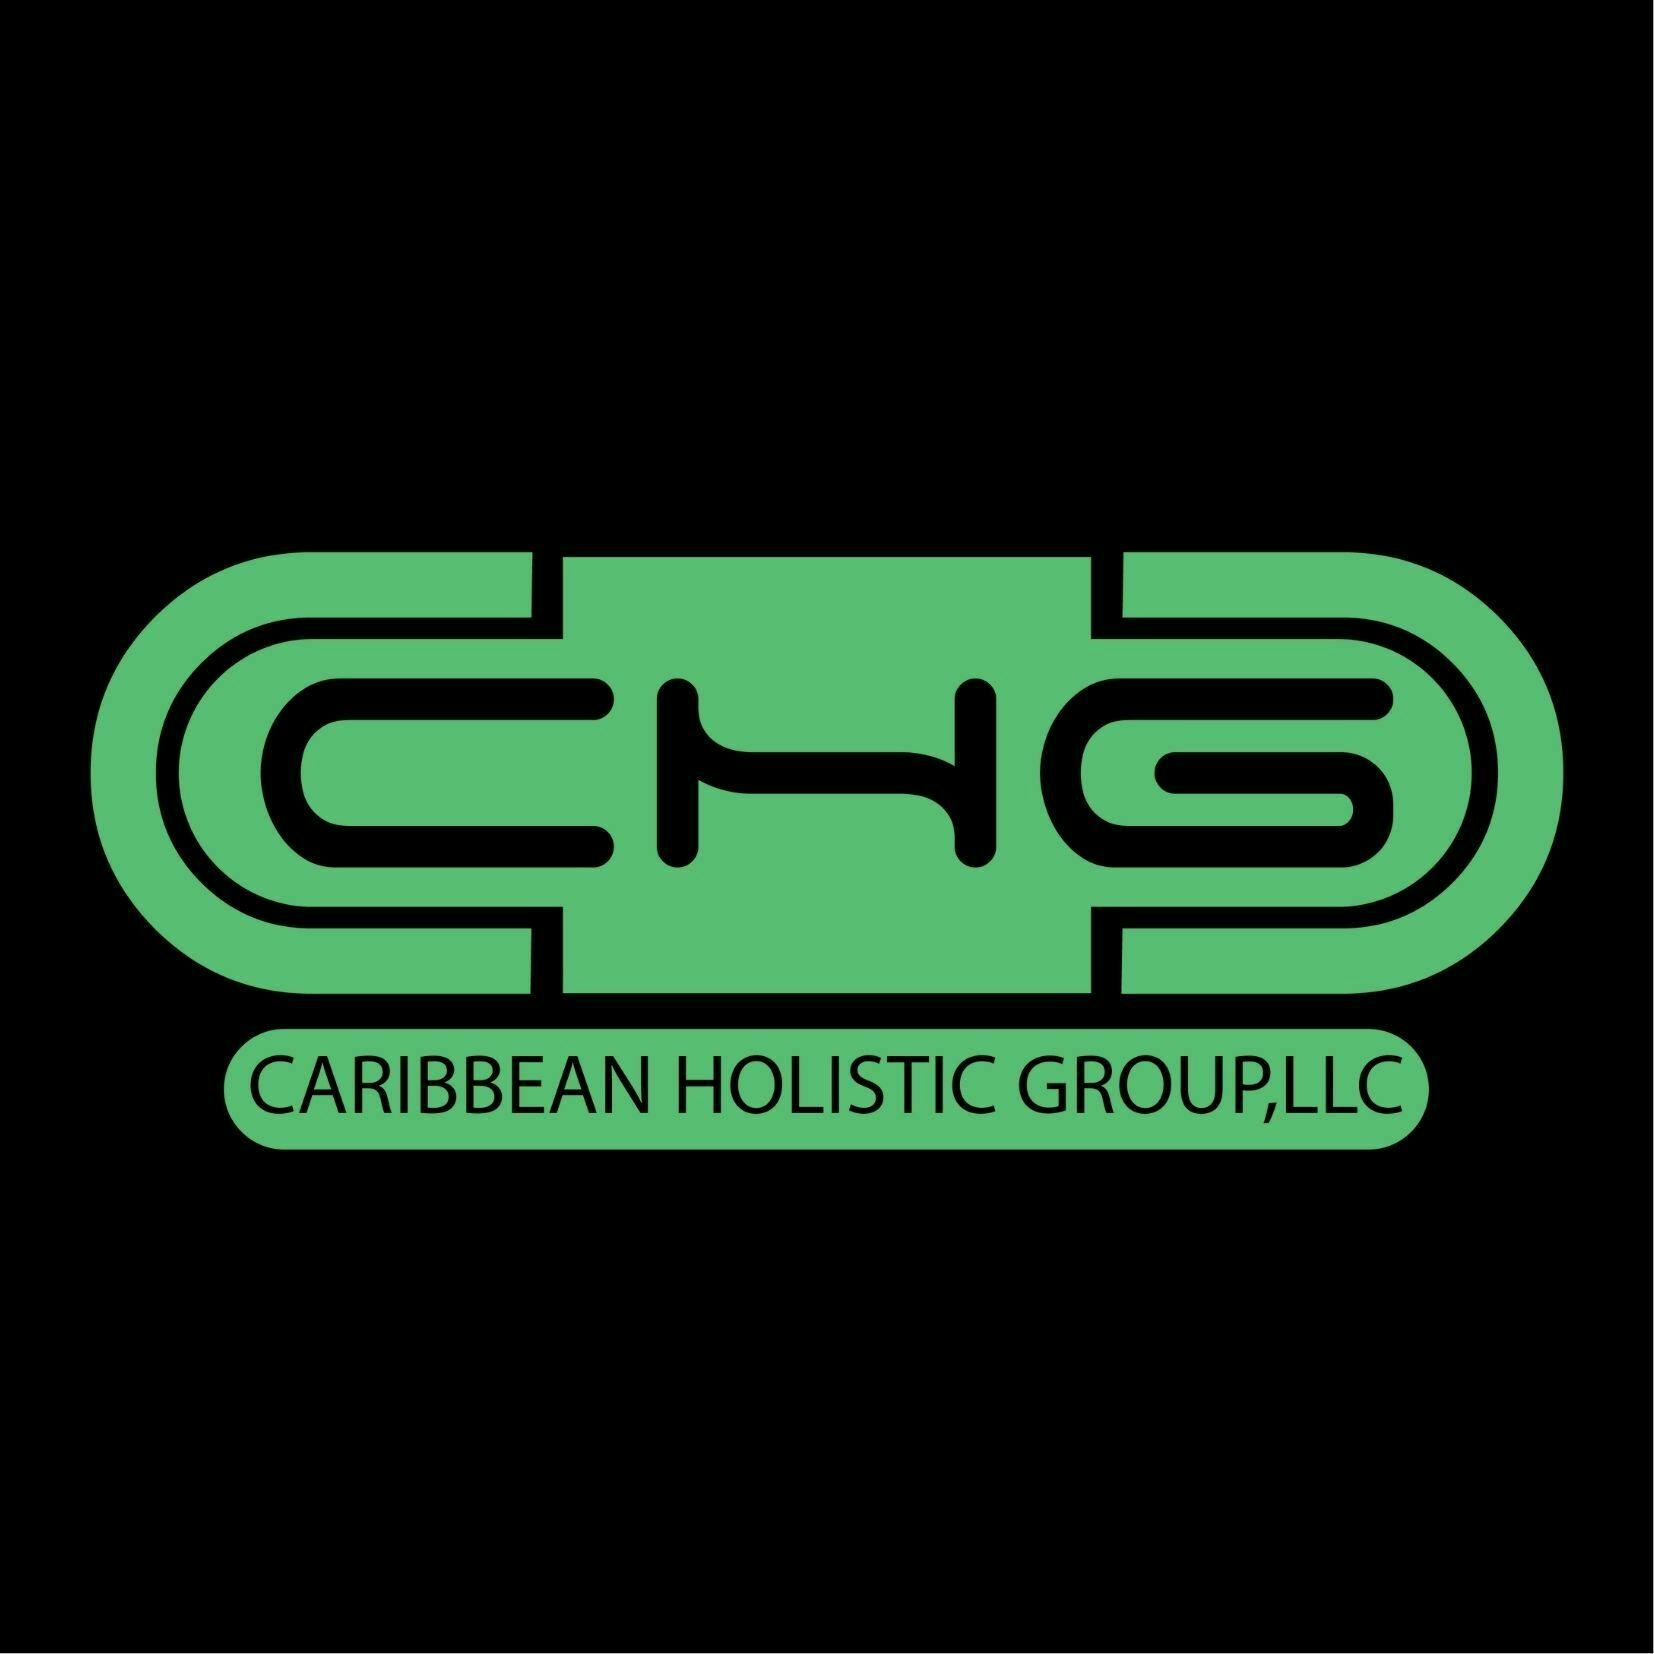 Caribbean Holistic Group LLC logo